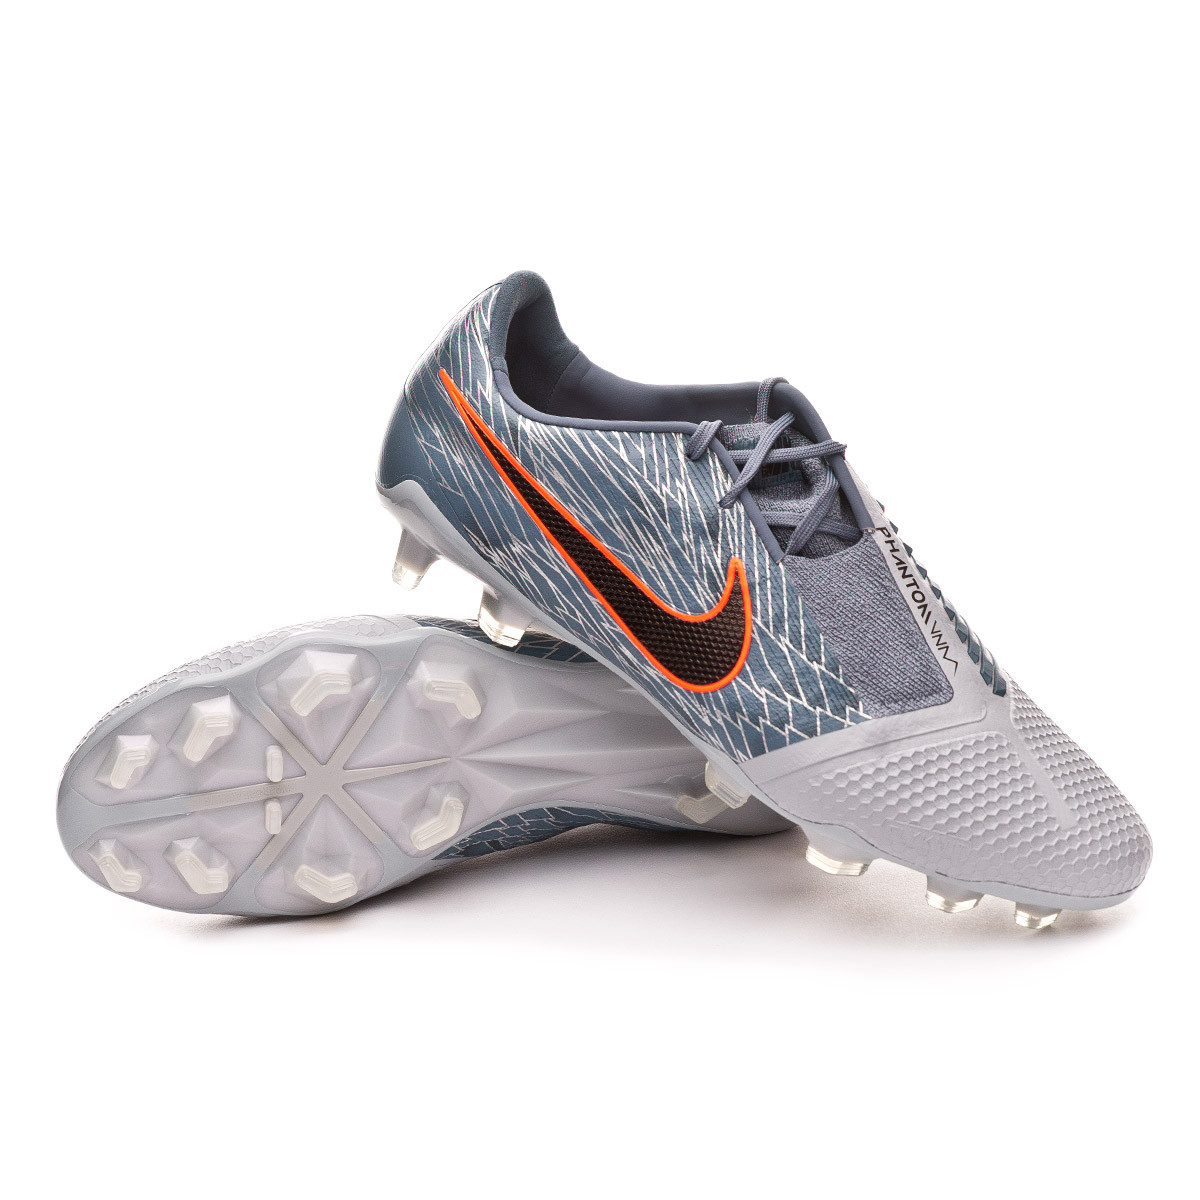 $149.95 Nike Hypervenom Phantom FG Soccer Cleats